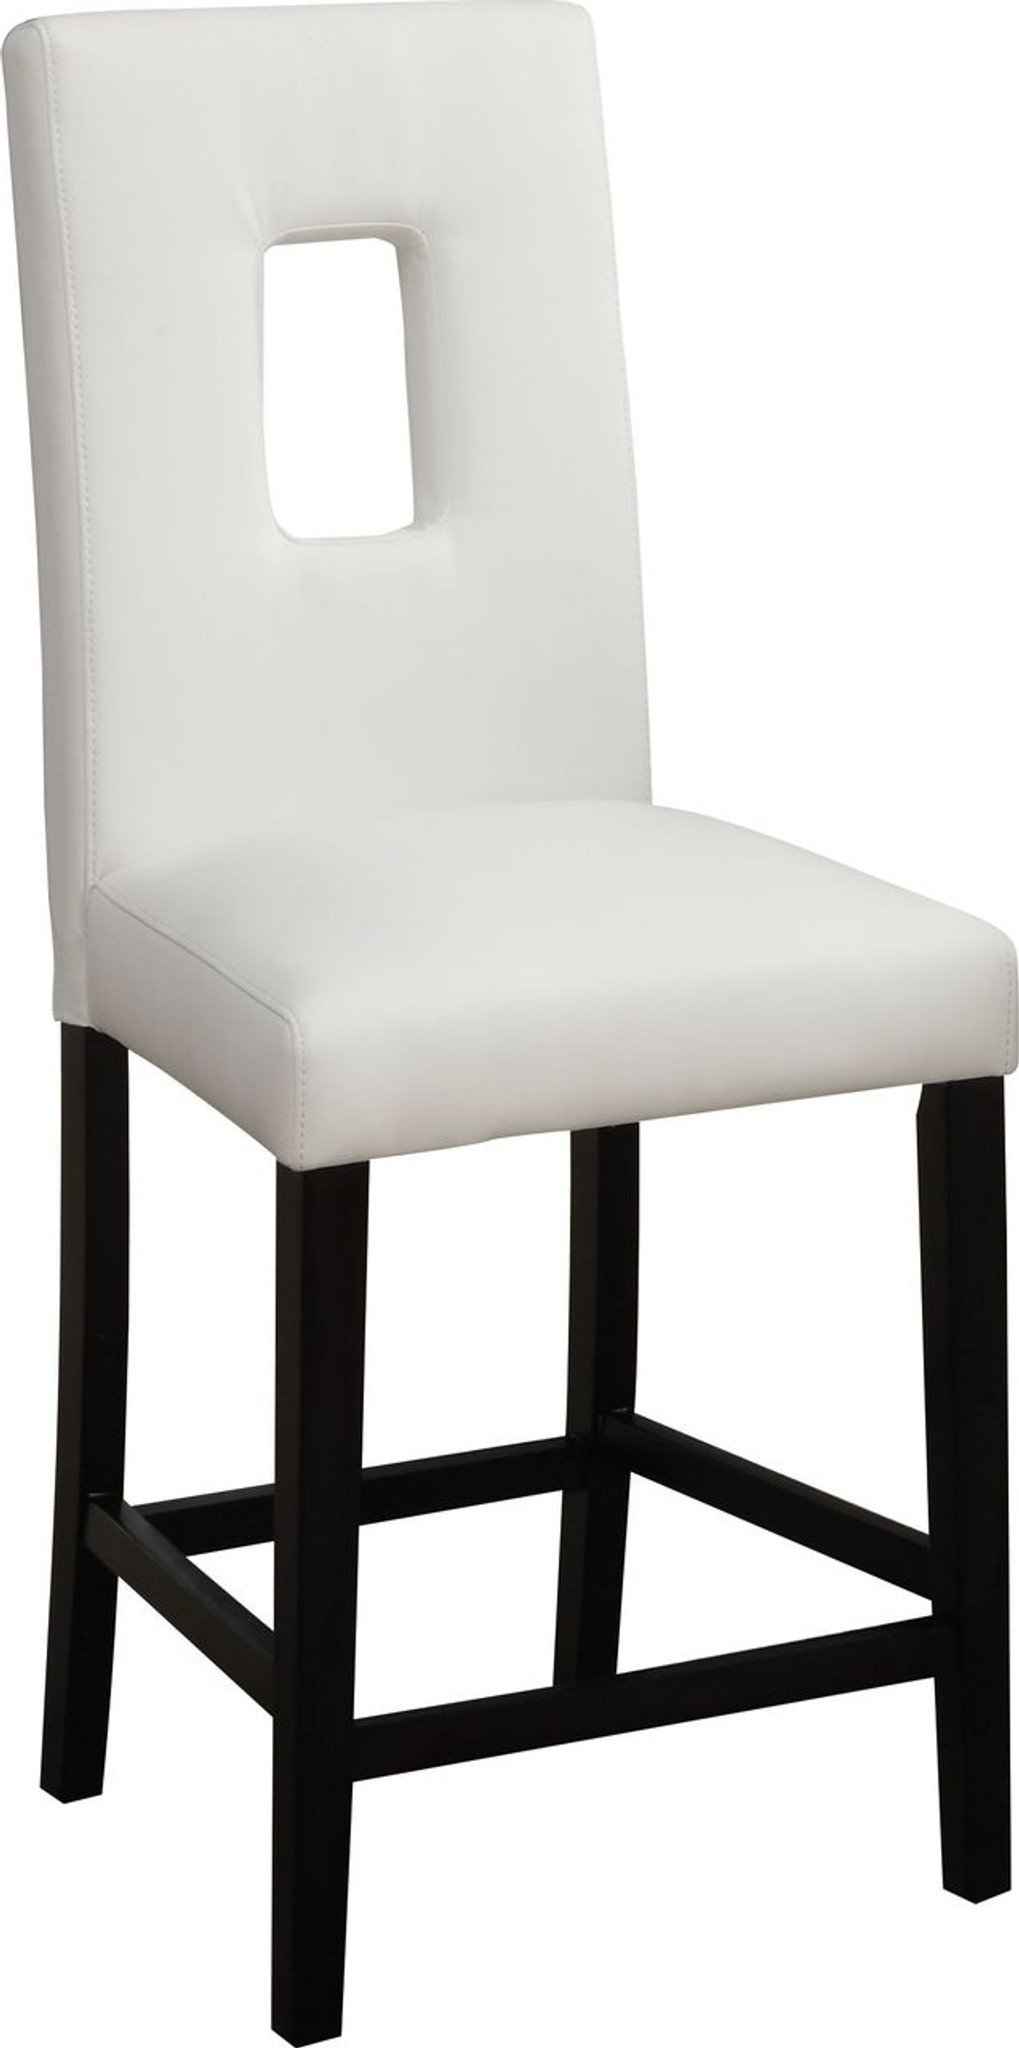 Counter High Chair Cream Pu Kassa Mall Home Furniture